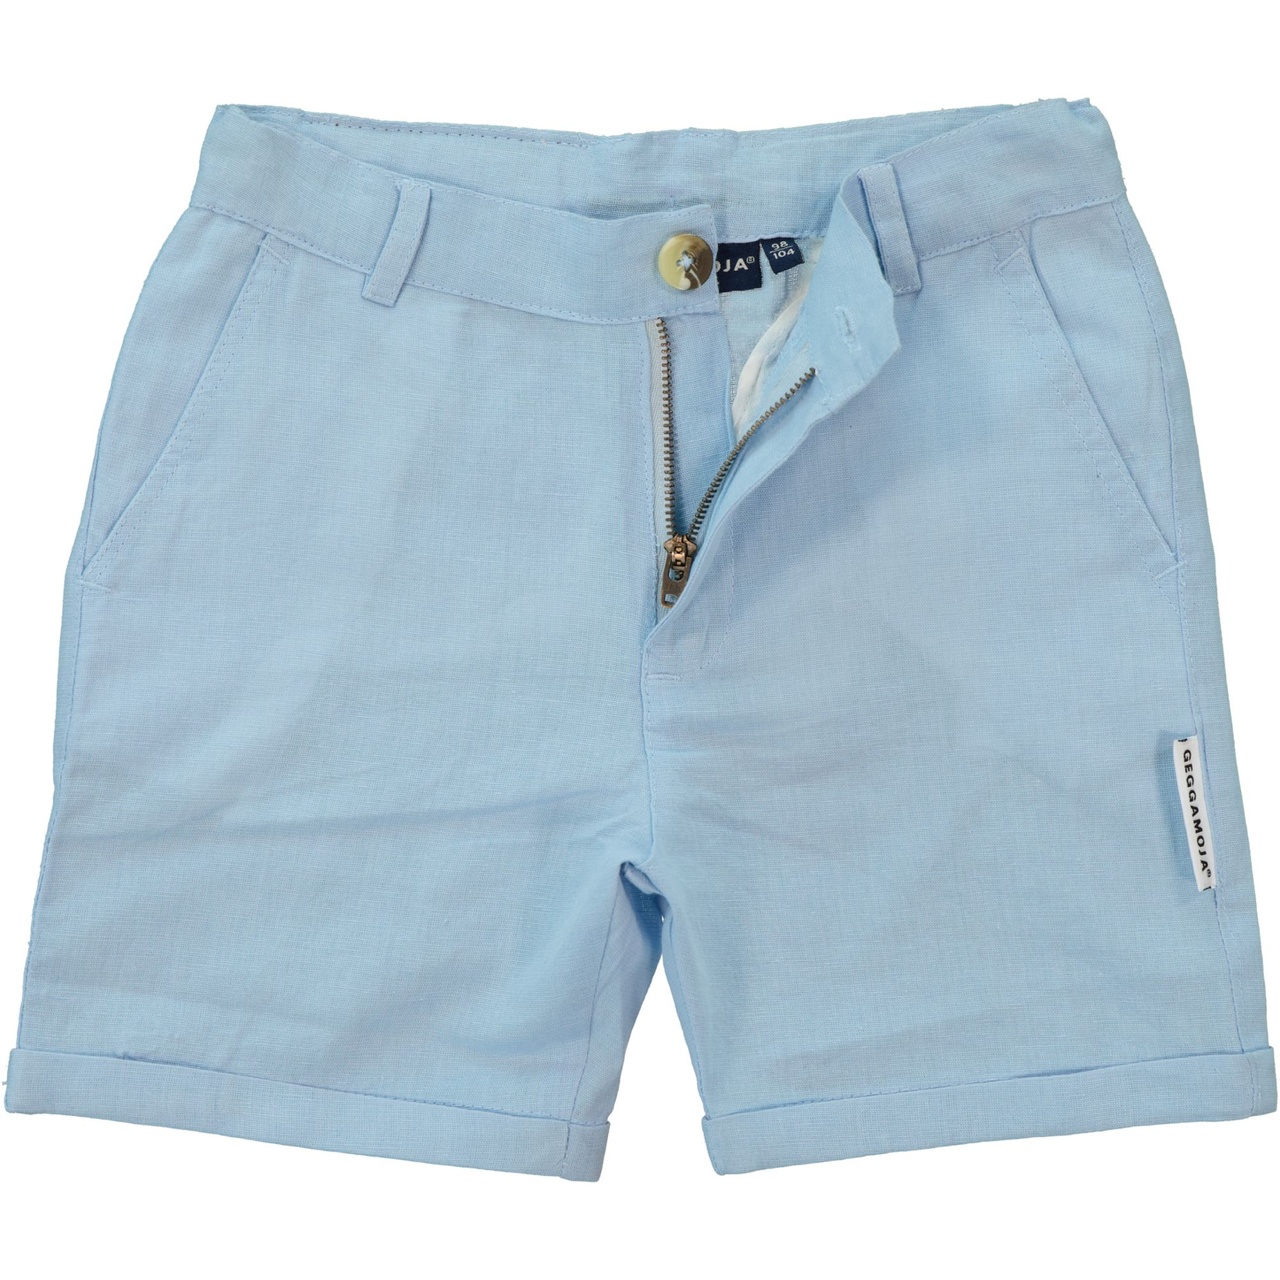 Linnen chino shorts Light blue